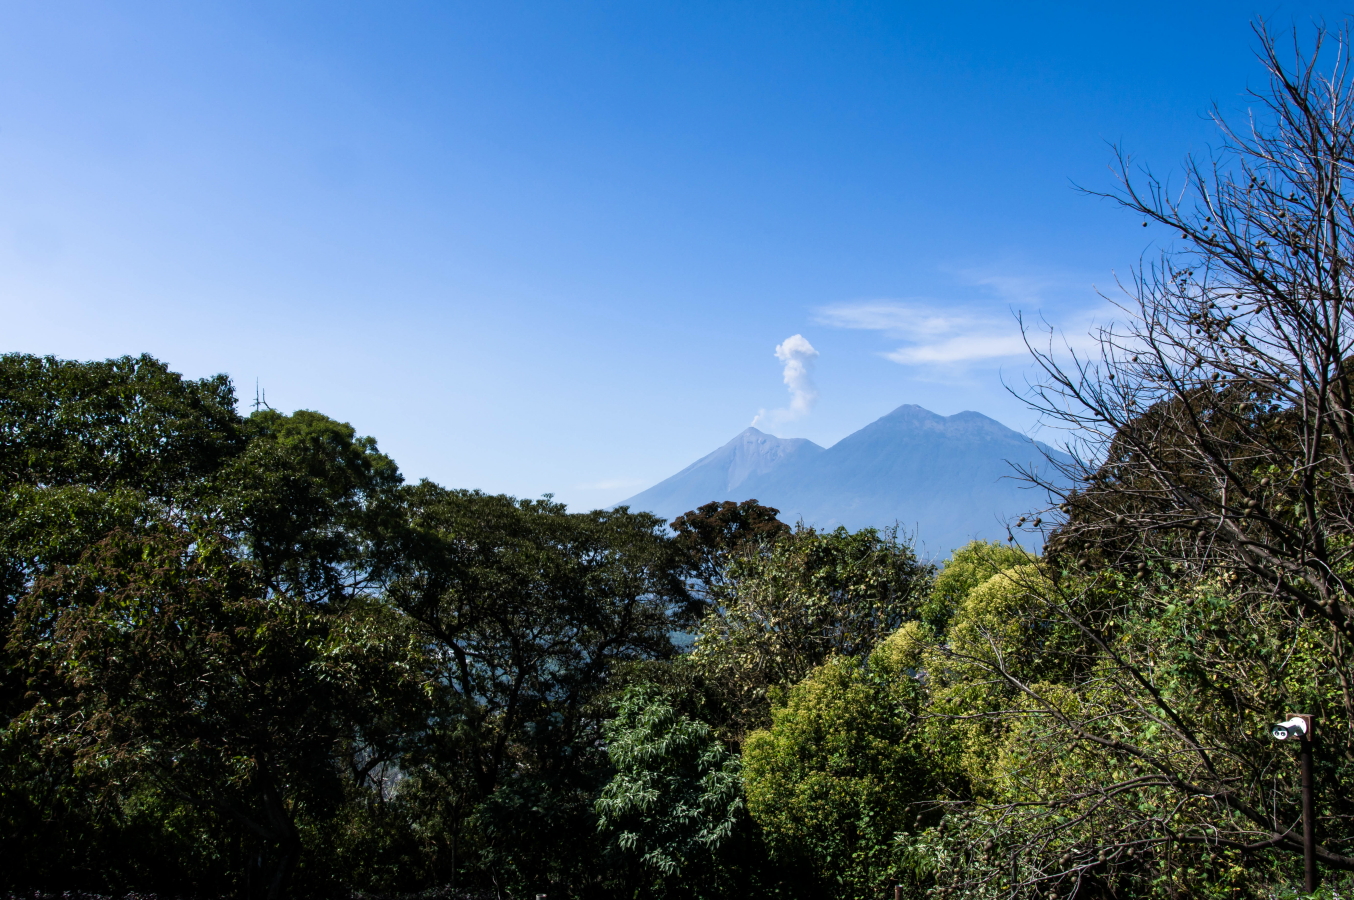 Guatemala, Volcan Acatenango and Volcan Fuego, Volcan de Fuego and Volcan Acatenango, Walkopedia